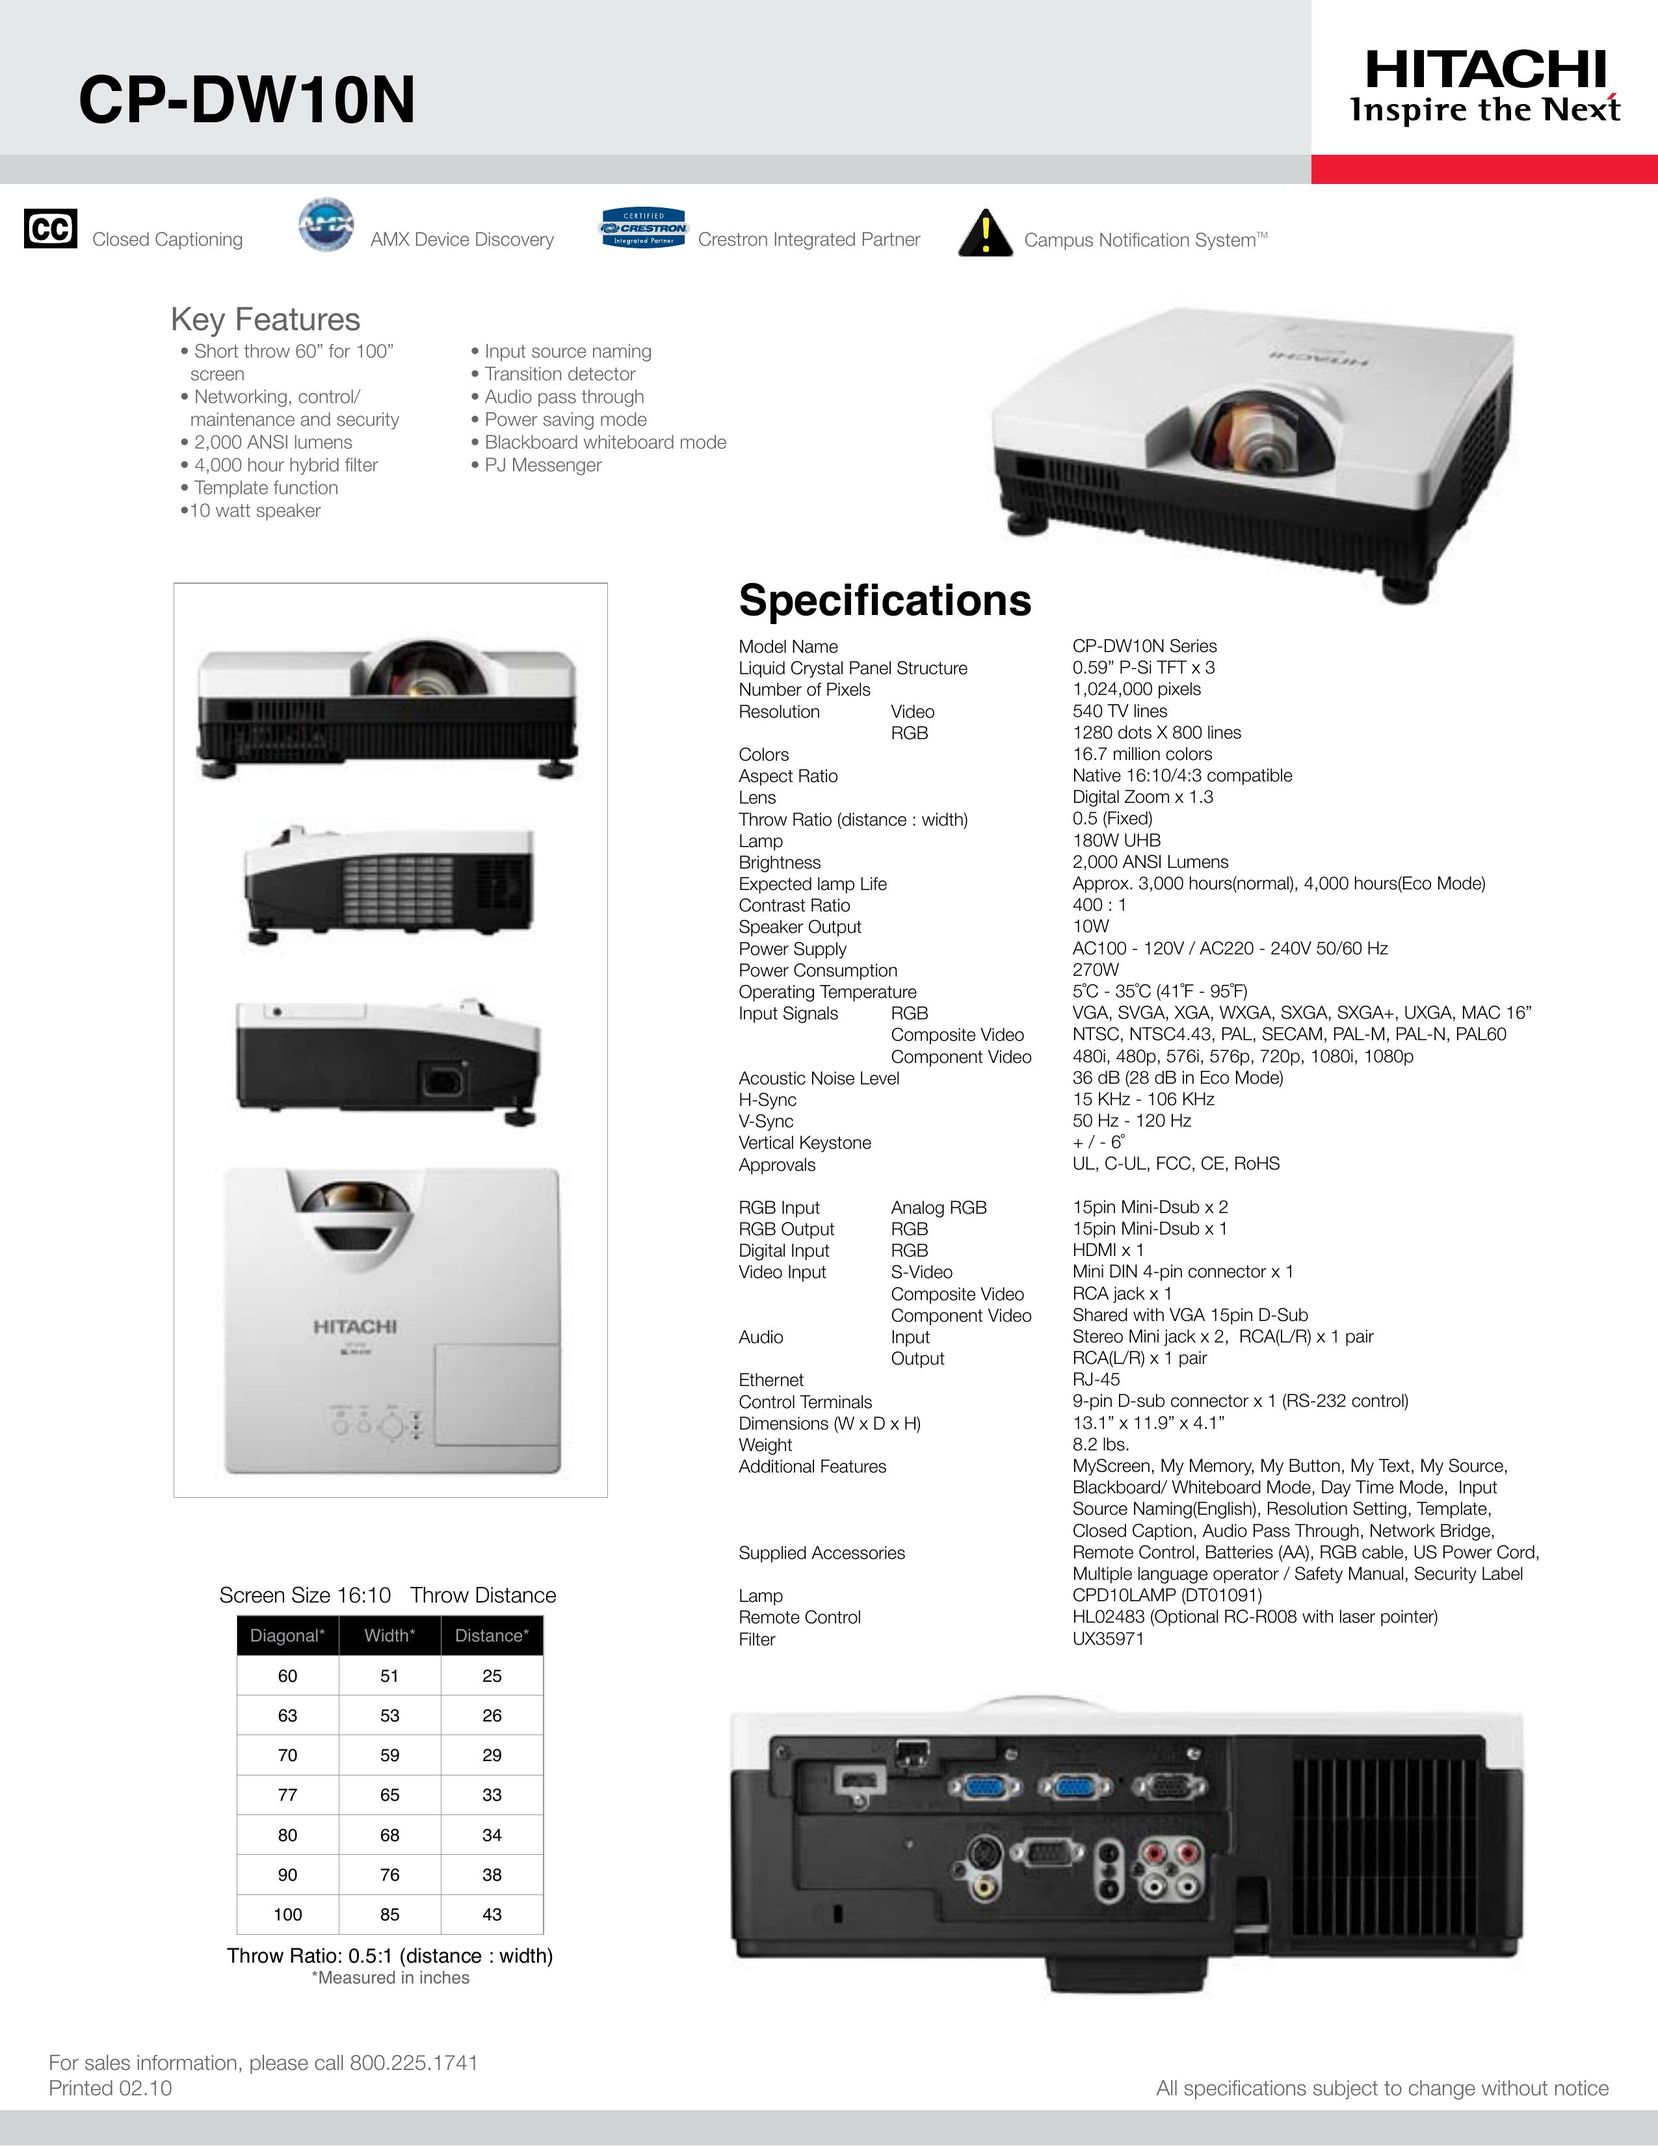 Hitachi CP-DW10N Projector User Manual